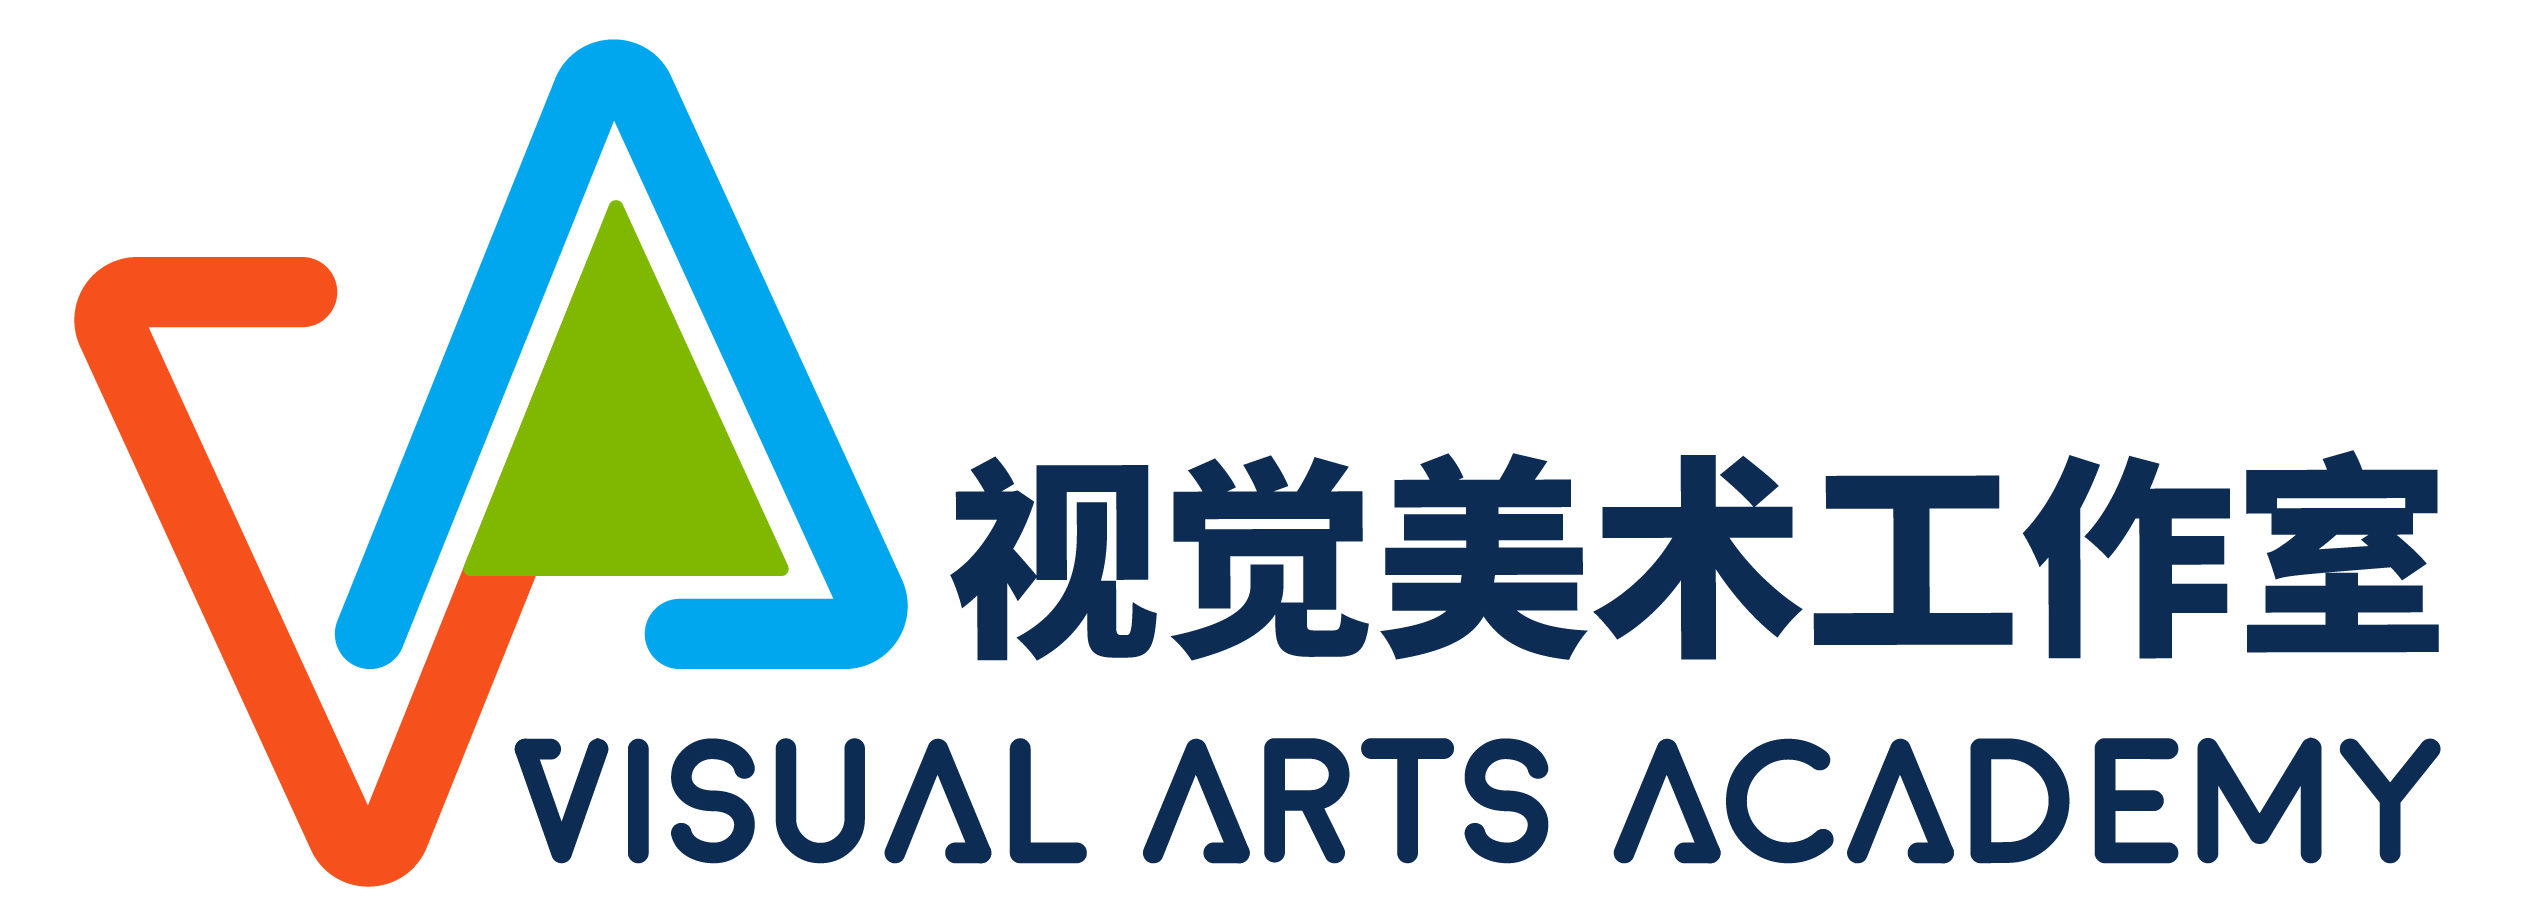 Visual Arts Academy